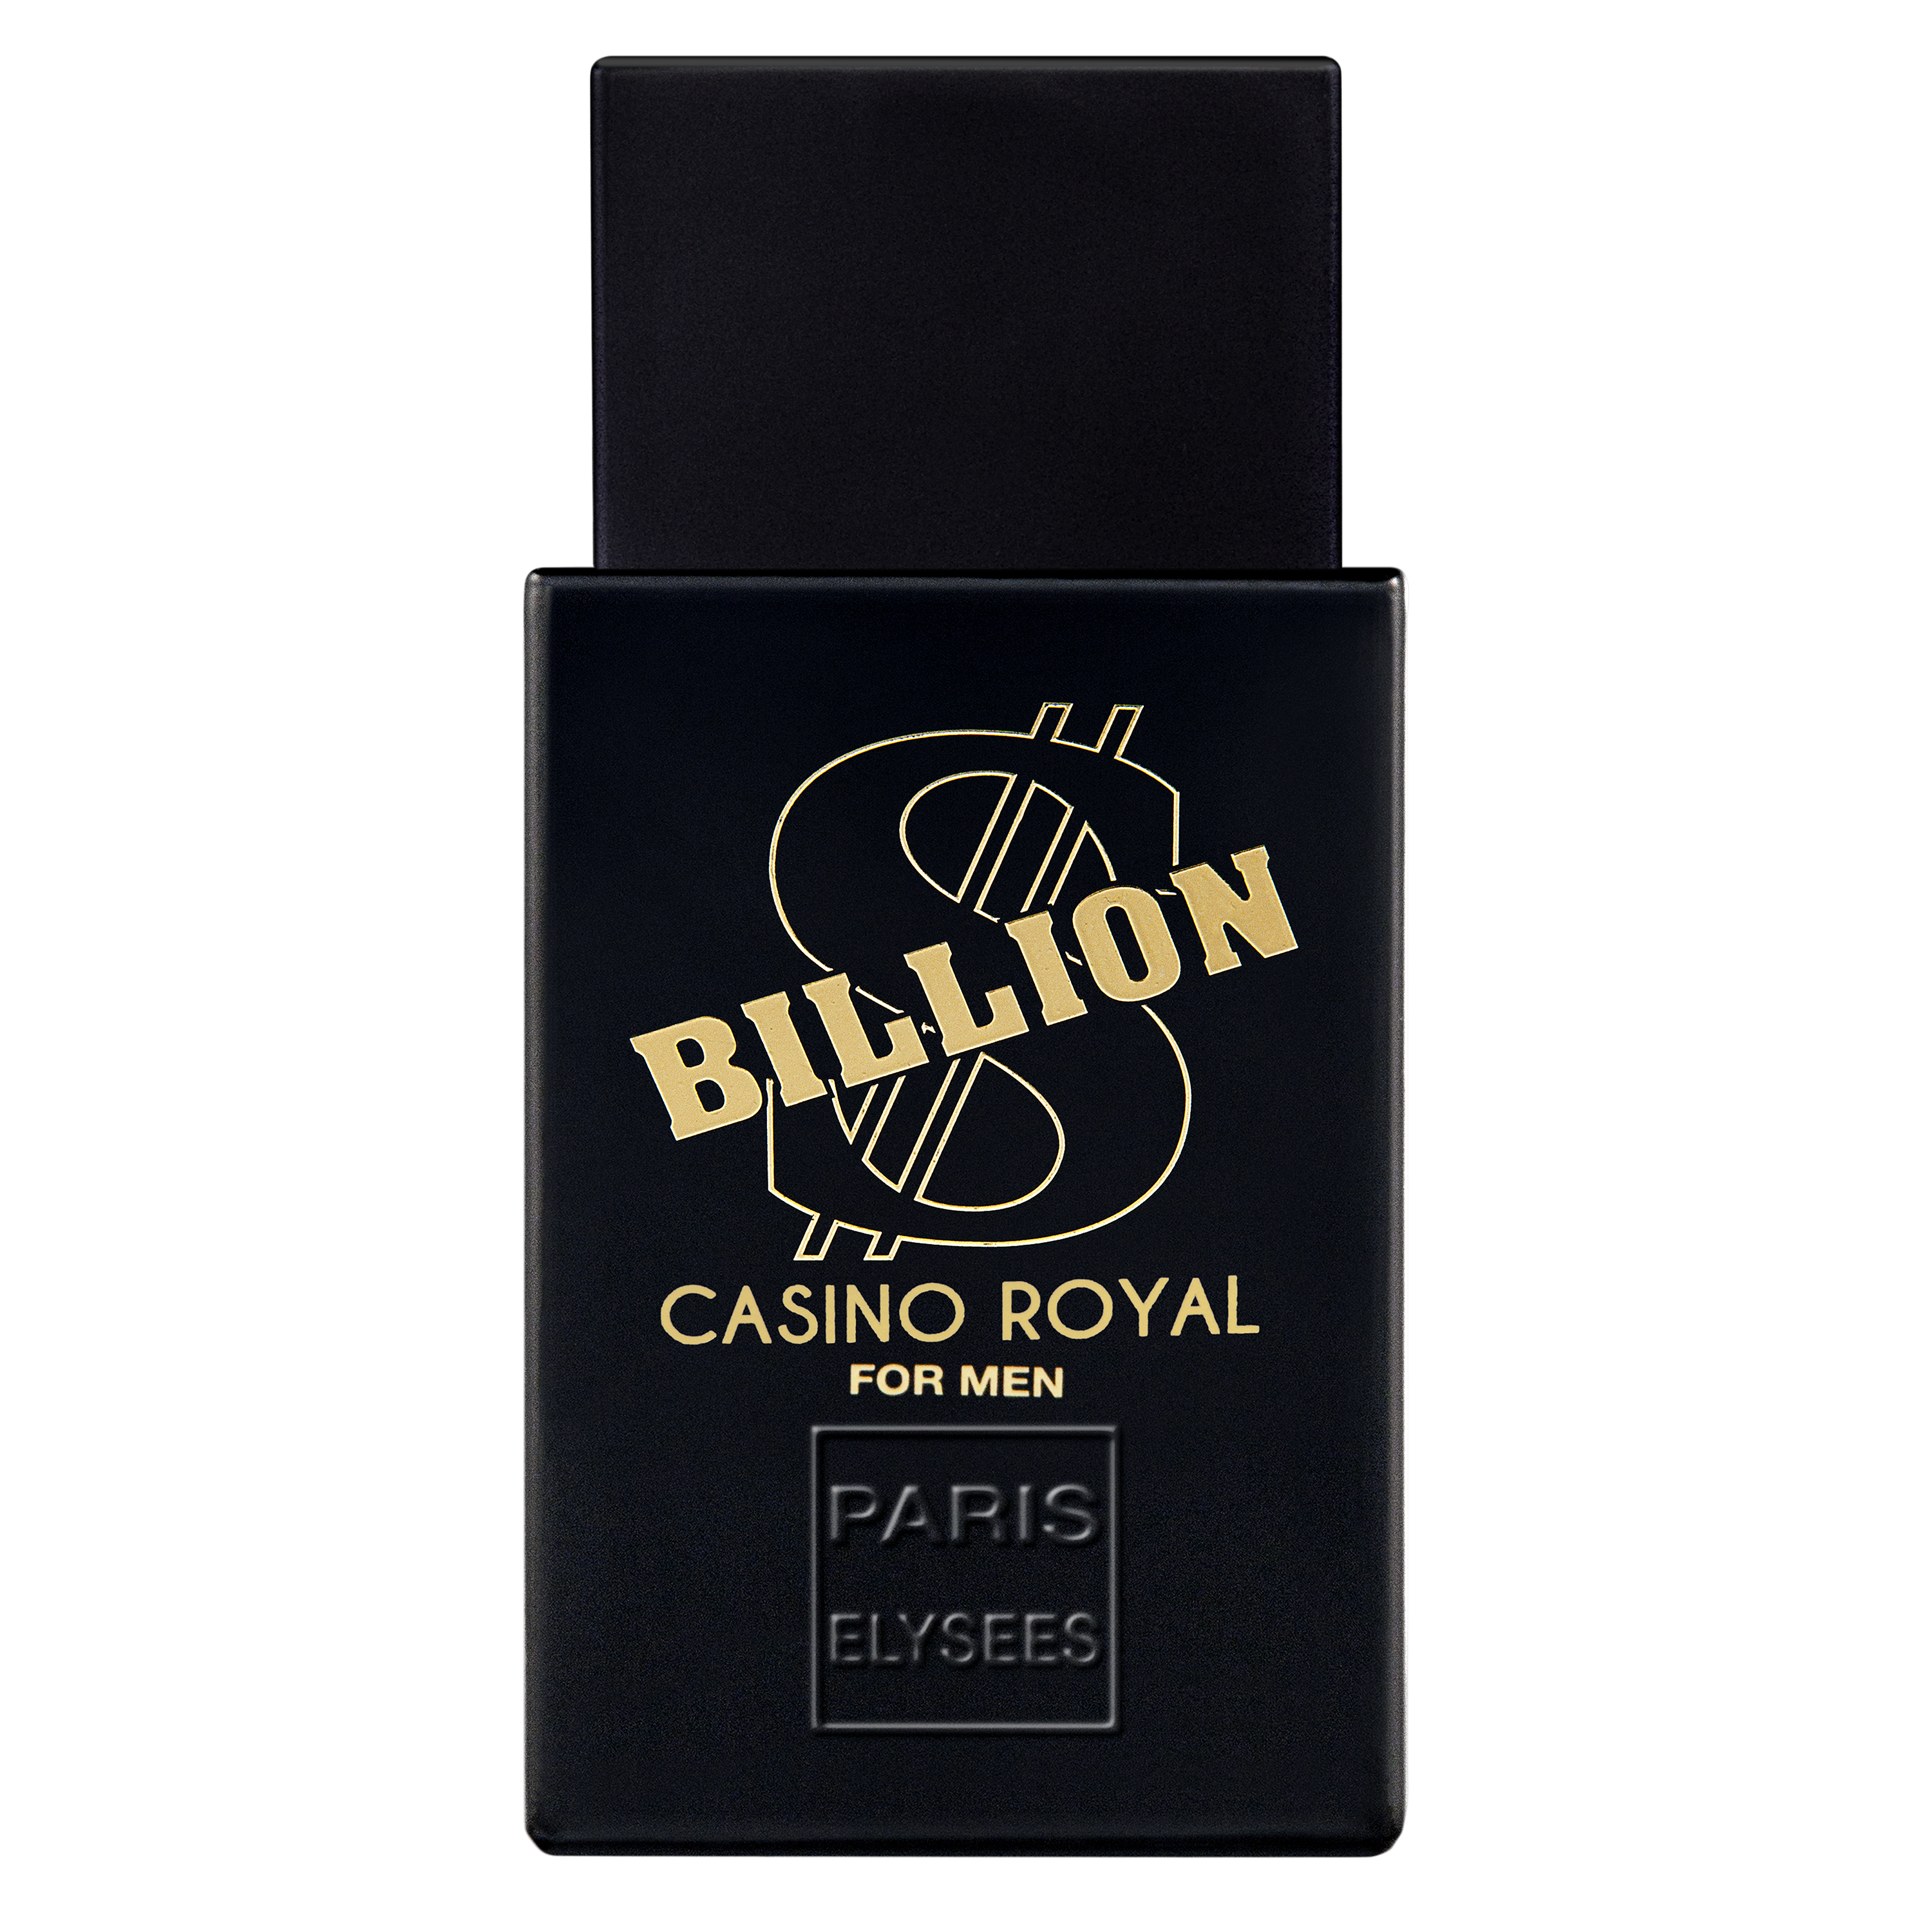 Caviar Black, Vodka Limited & Billion Dollar Casino Royal Pack of 3 EDT For Men 100 ML Each